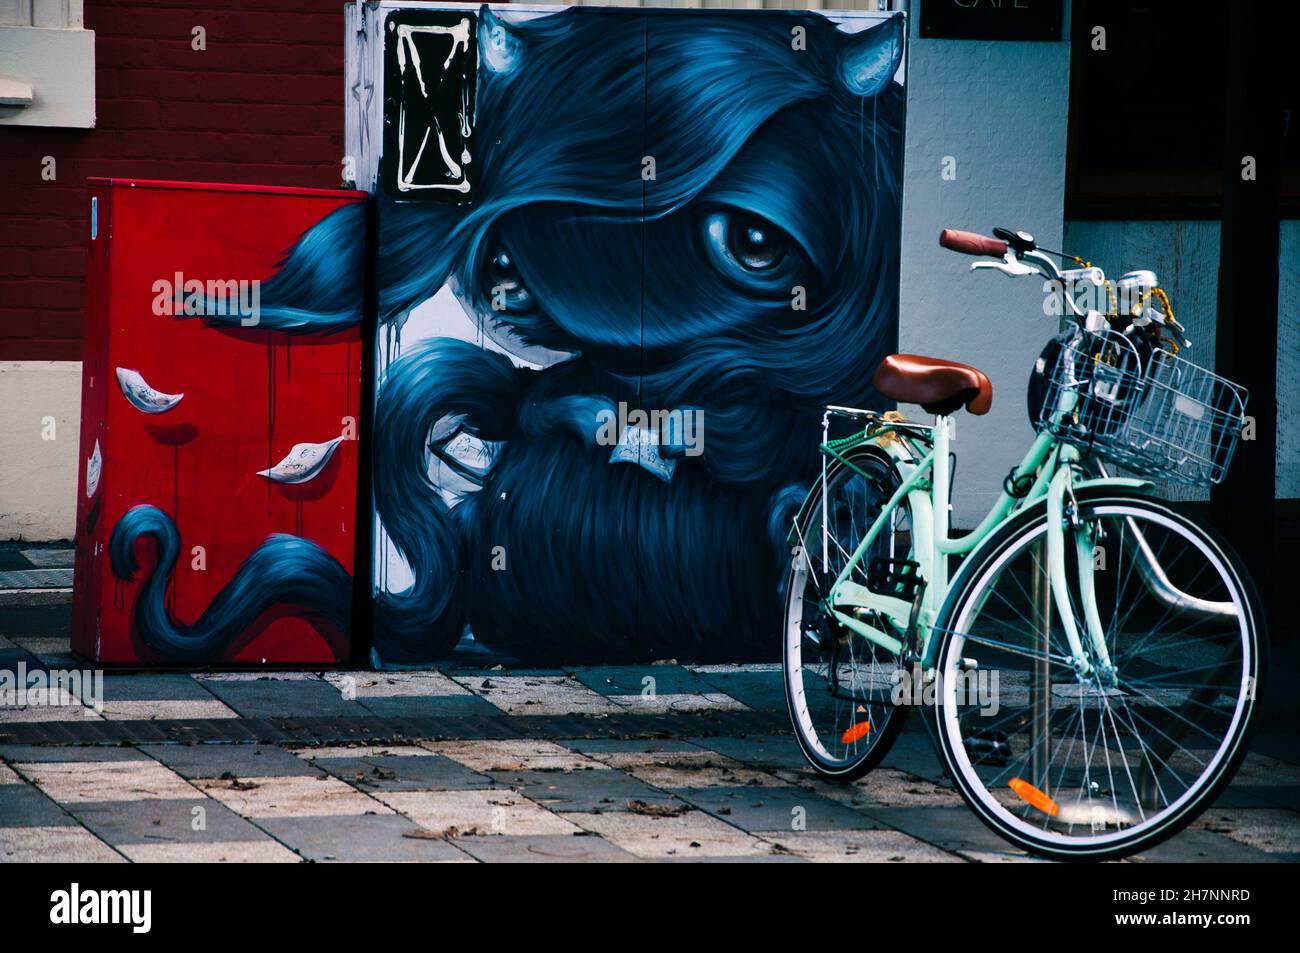 Old School bike next to a urban graffiti in Regional town Australia Stock Photo